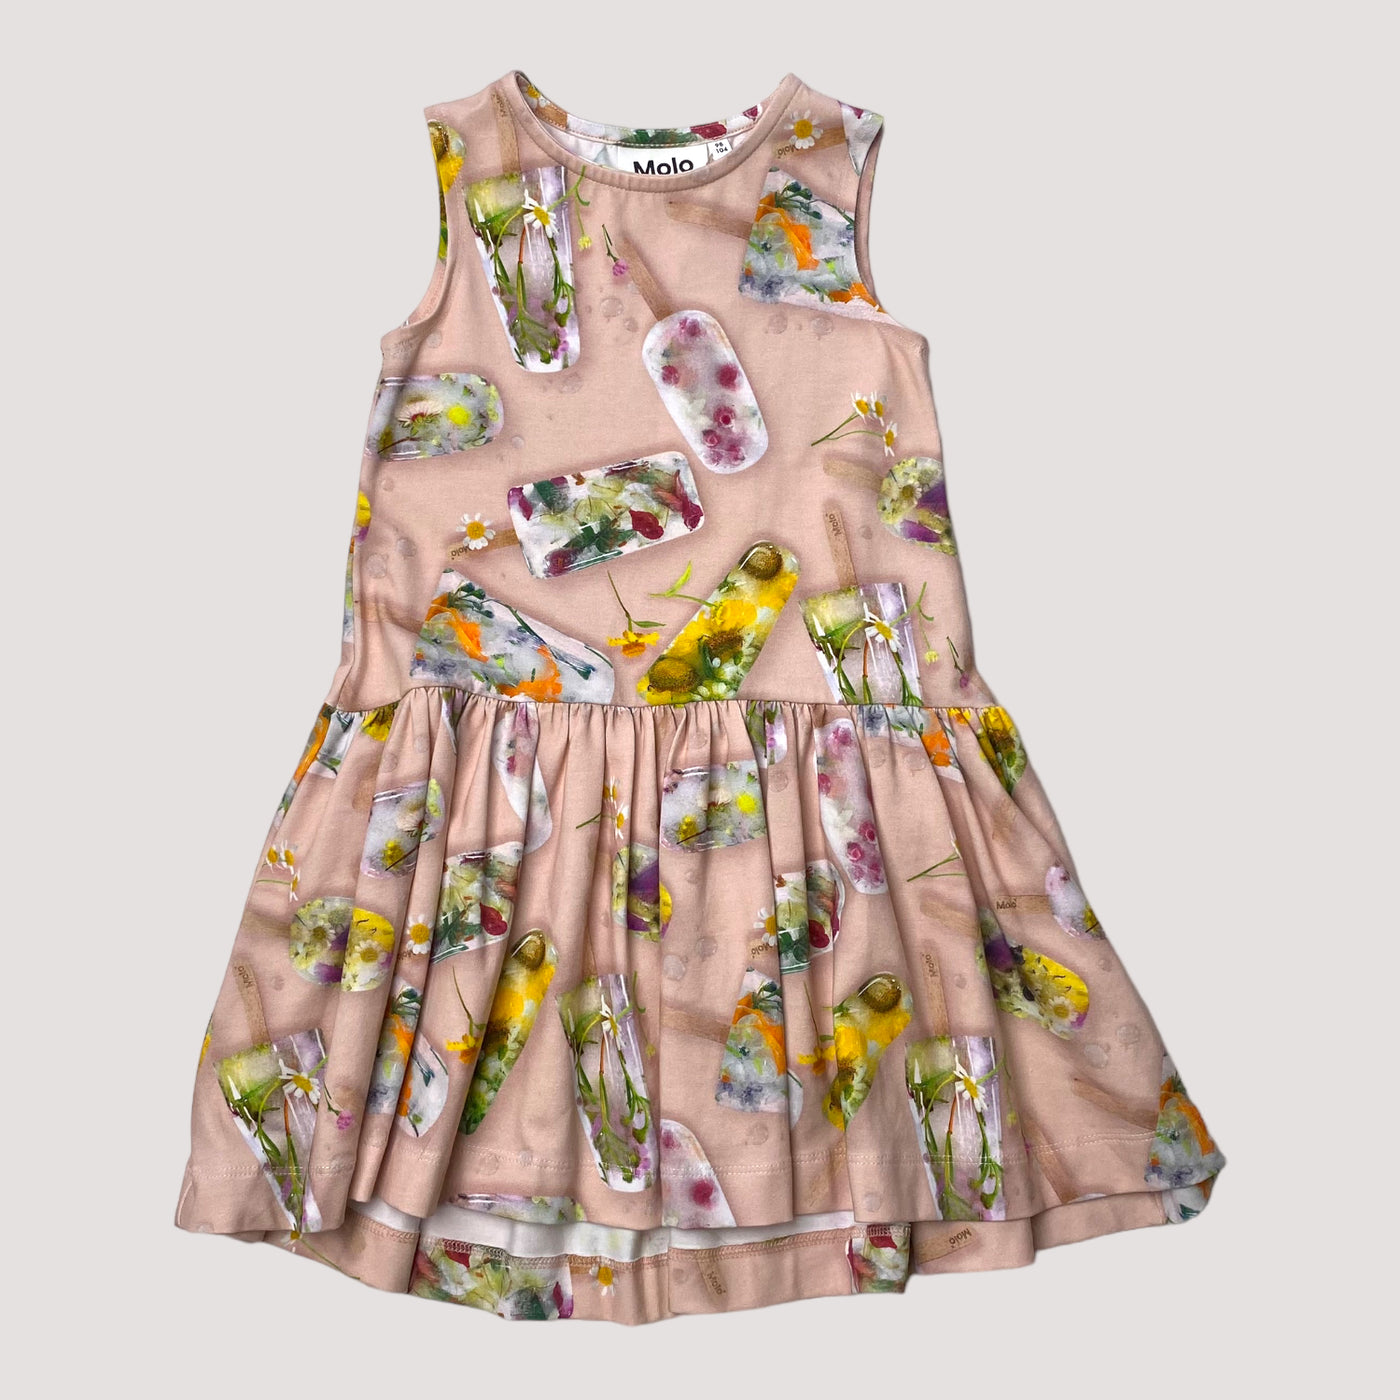 Molo sleeveless dress, ice lollies | 98/104cm